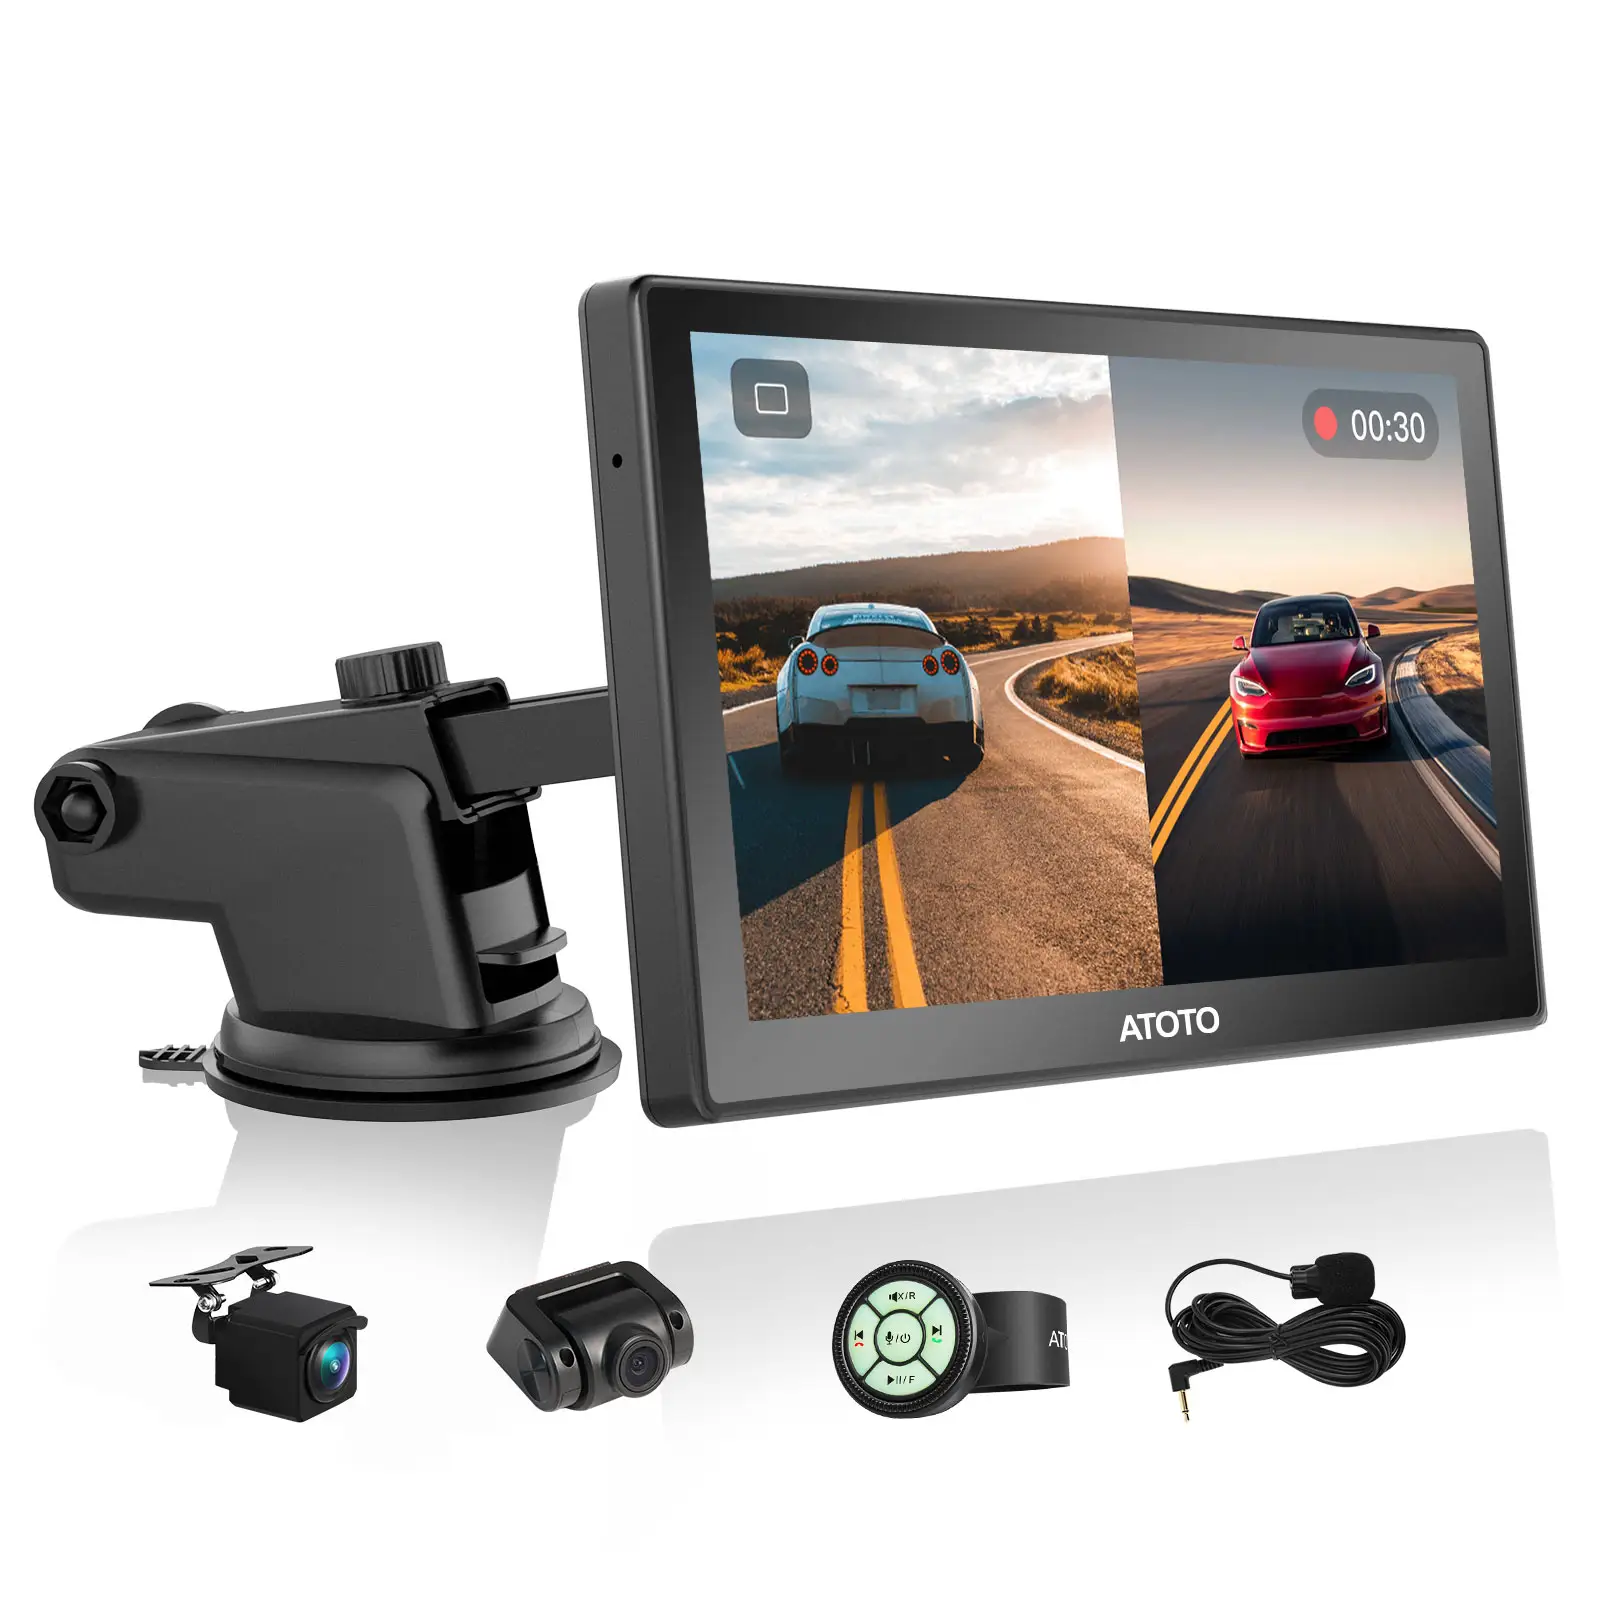 ATOTO araba GPS navigasyon 7 inç araç GPS navigasyon araba sistemi taşınabilir kamyon navigasyon cihazı araba otomatik dokunmatik ekran